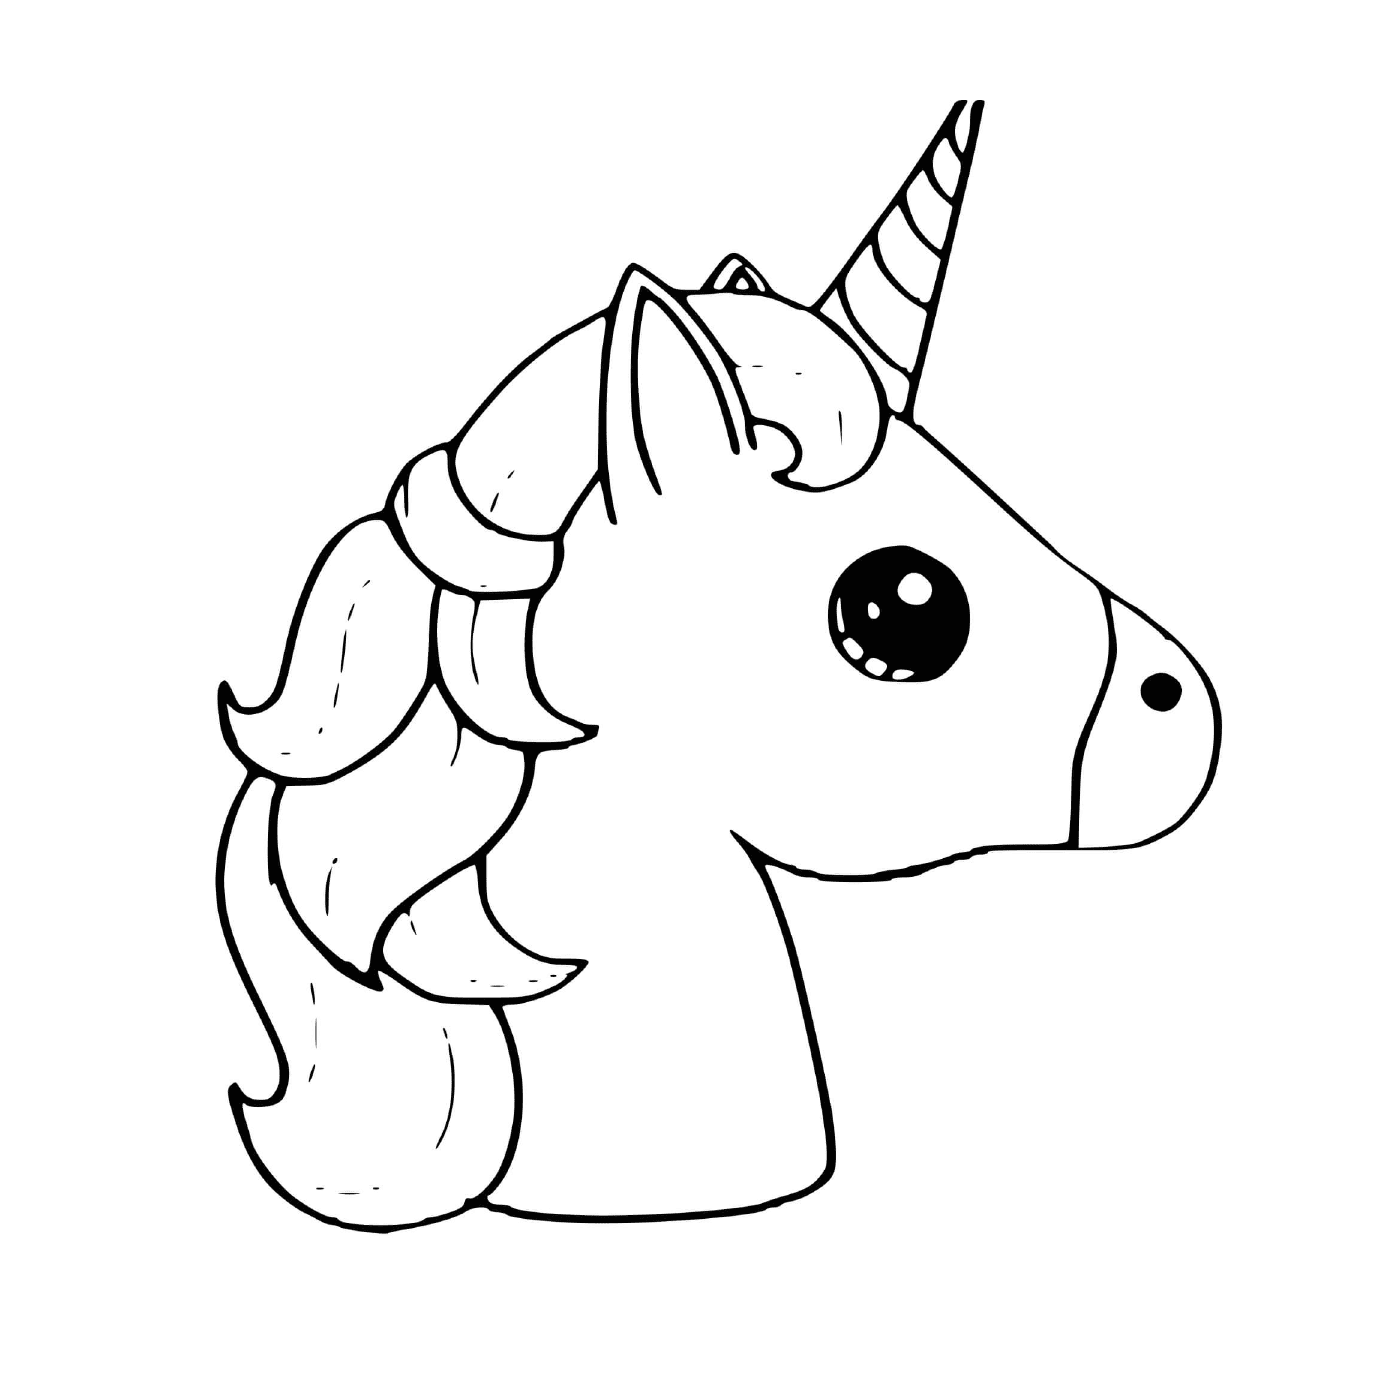  Lindo unicornio kawaii 